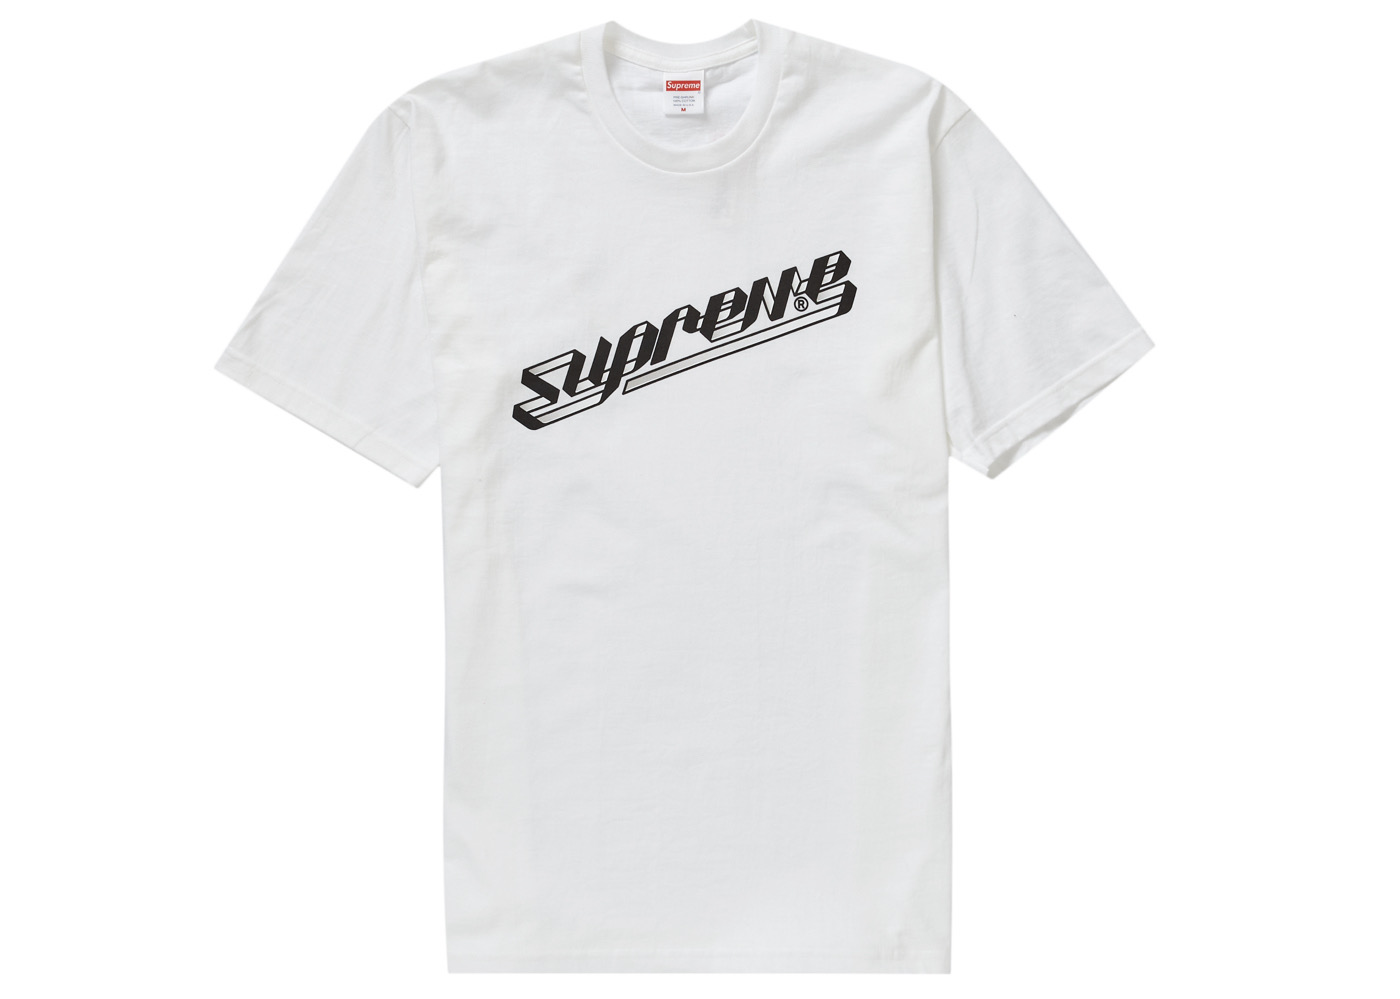 Sub-urb.net - Supreme F/W 2019 Banner Tee HK$799 🌍Ship